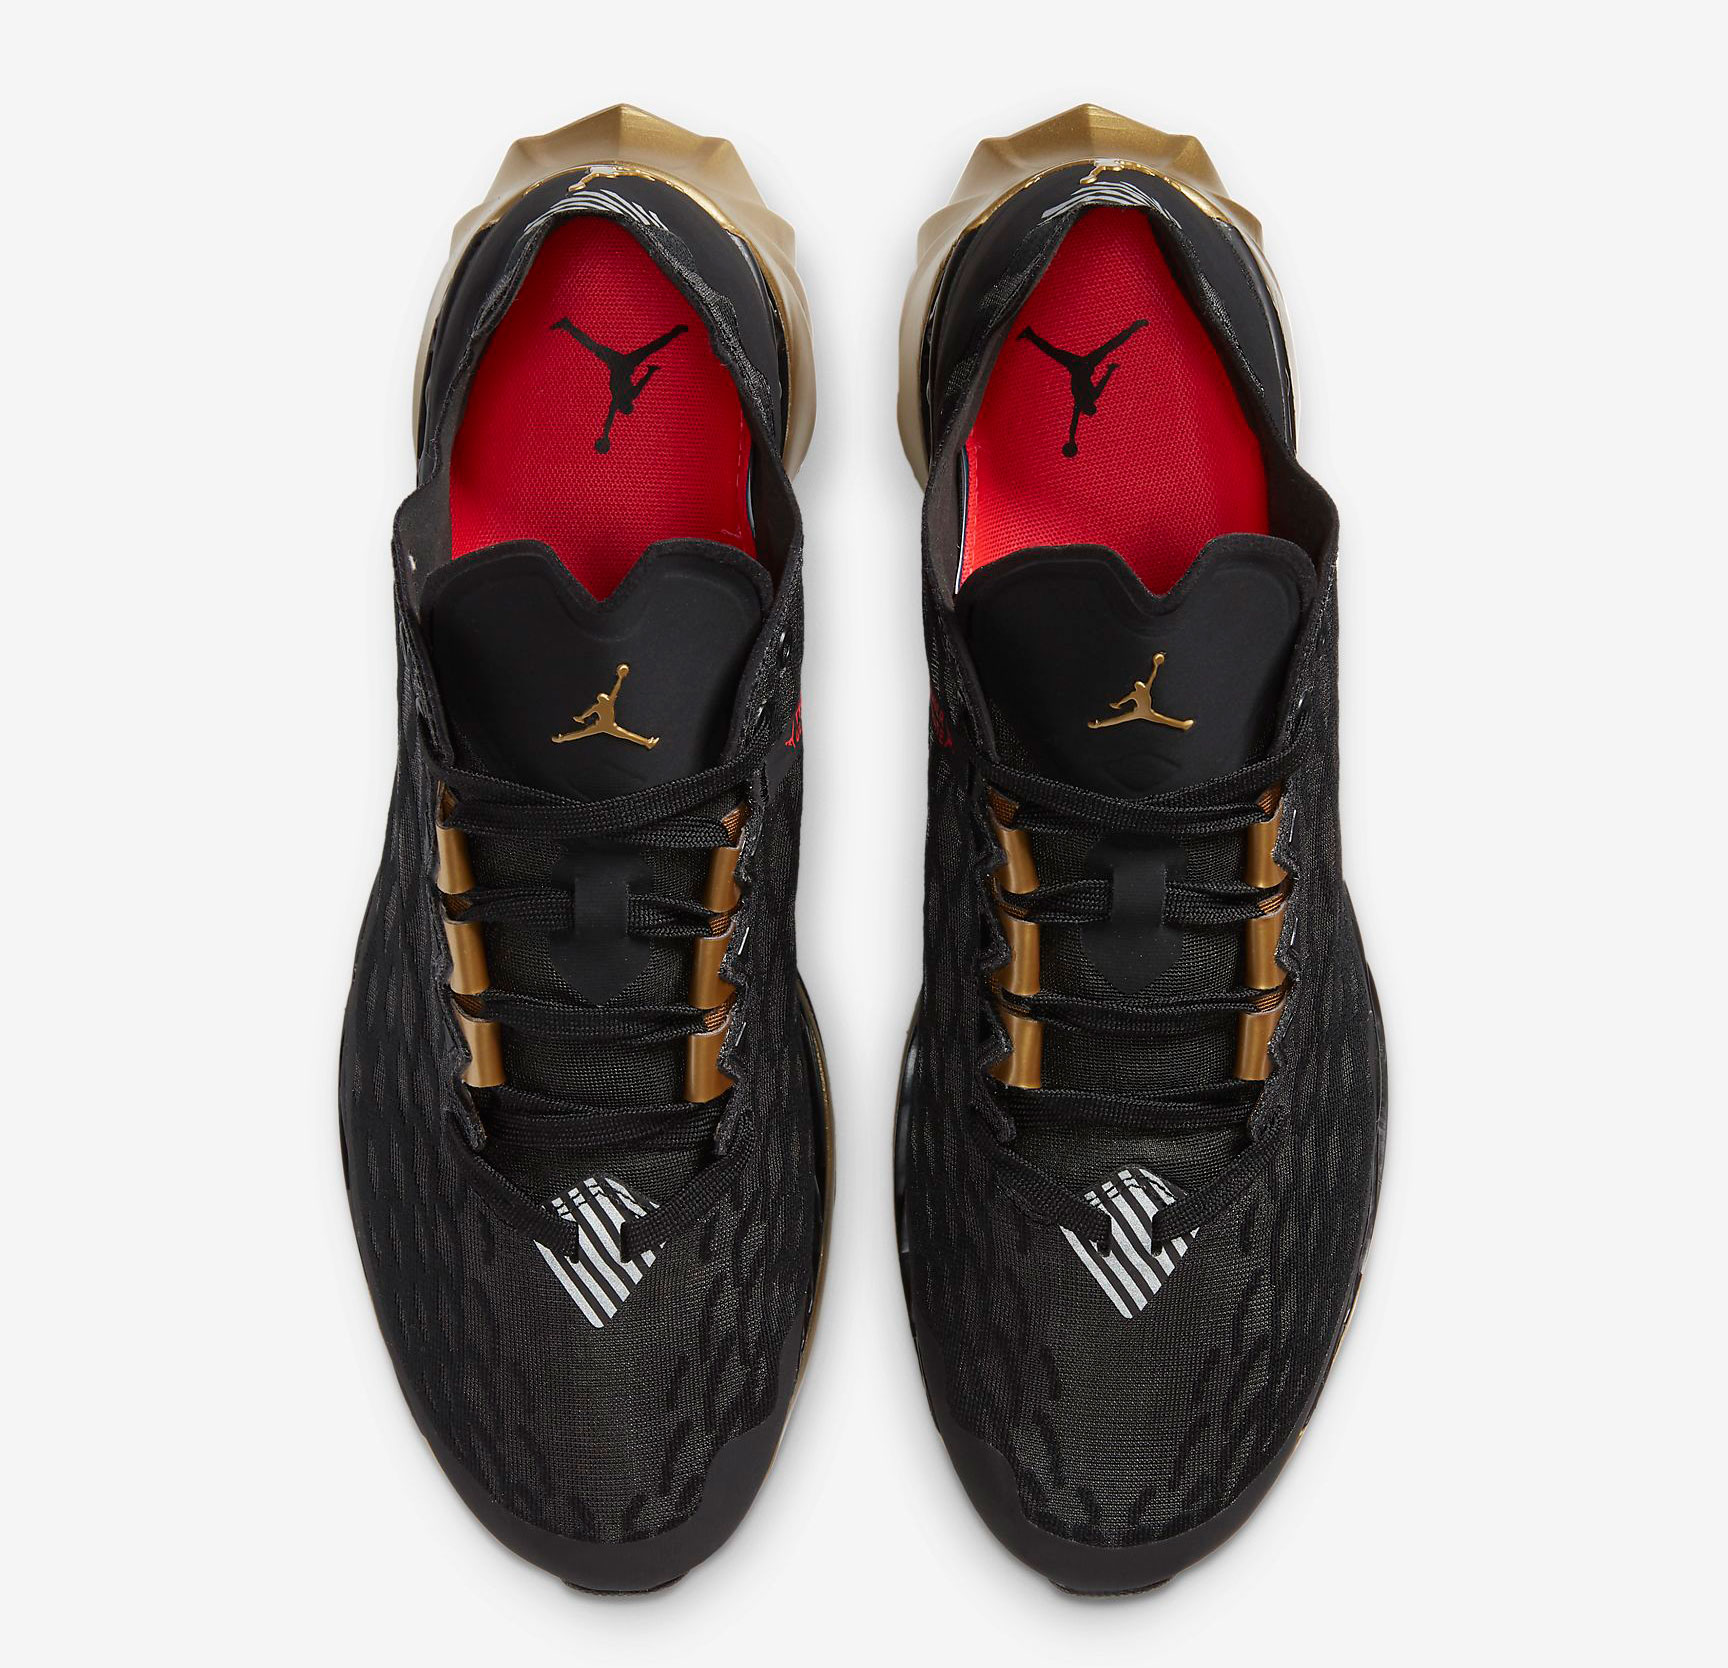 Jordan Trunner Ultimate DMP Clothing Match | SneakerFits.com